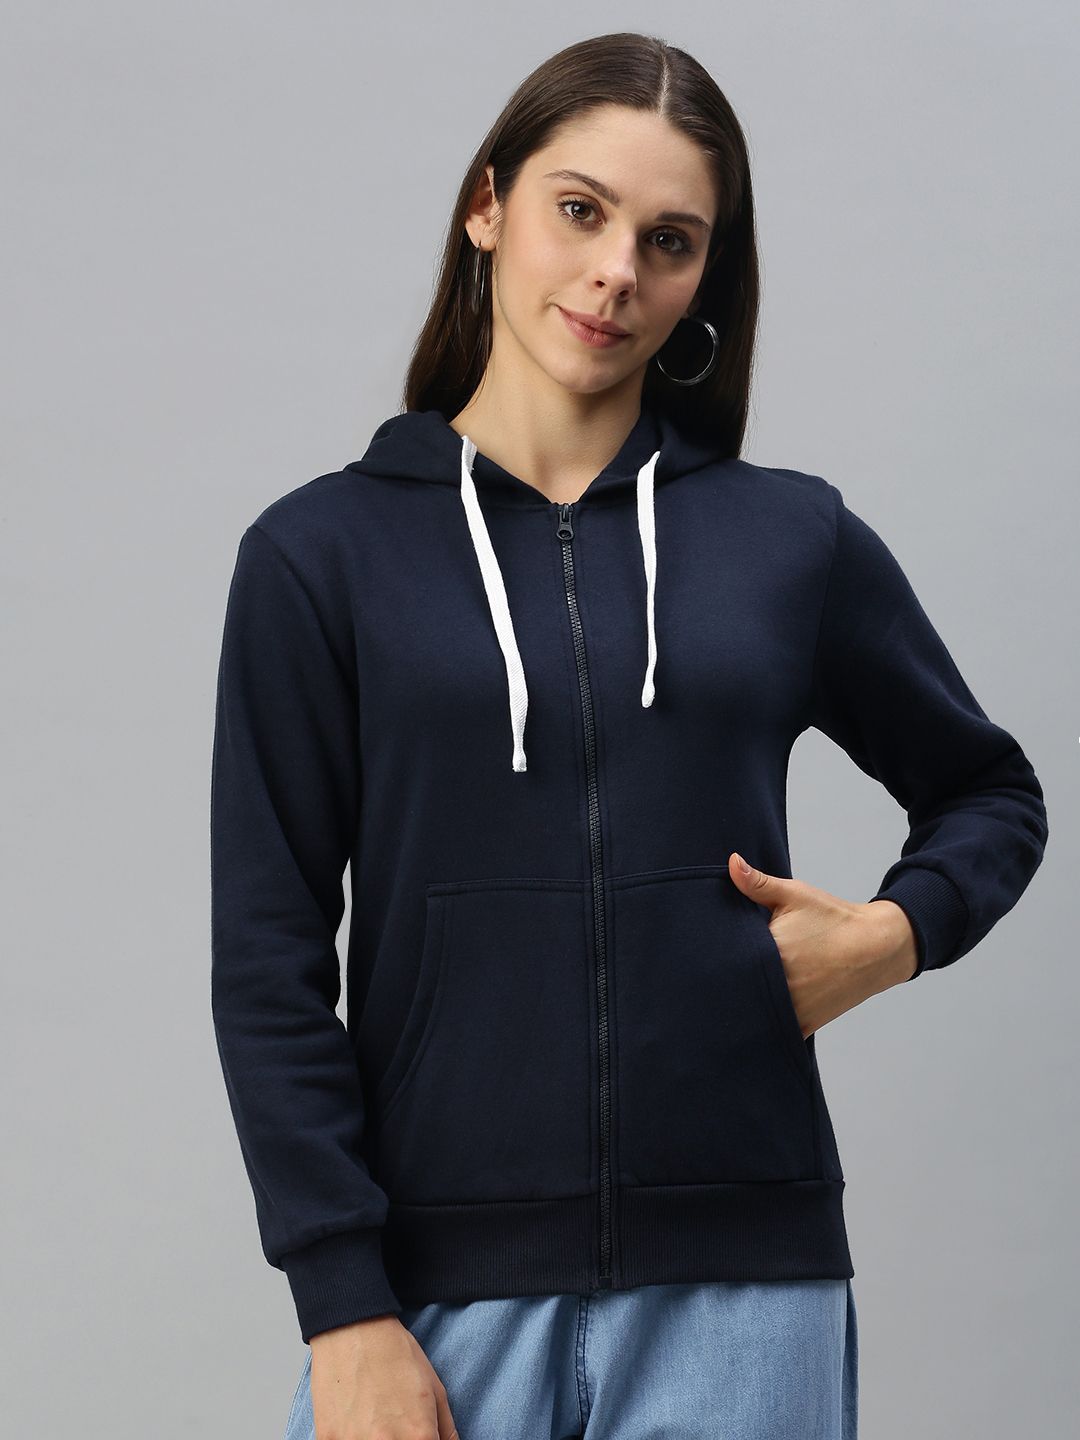 Campus Sutra Women Navy Blue Hooded Sweatshirt Price in India